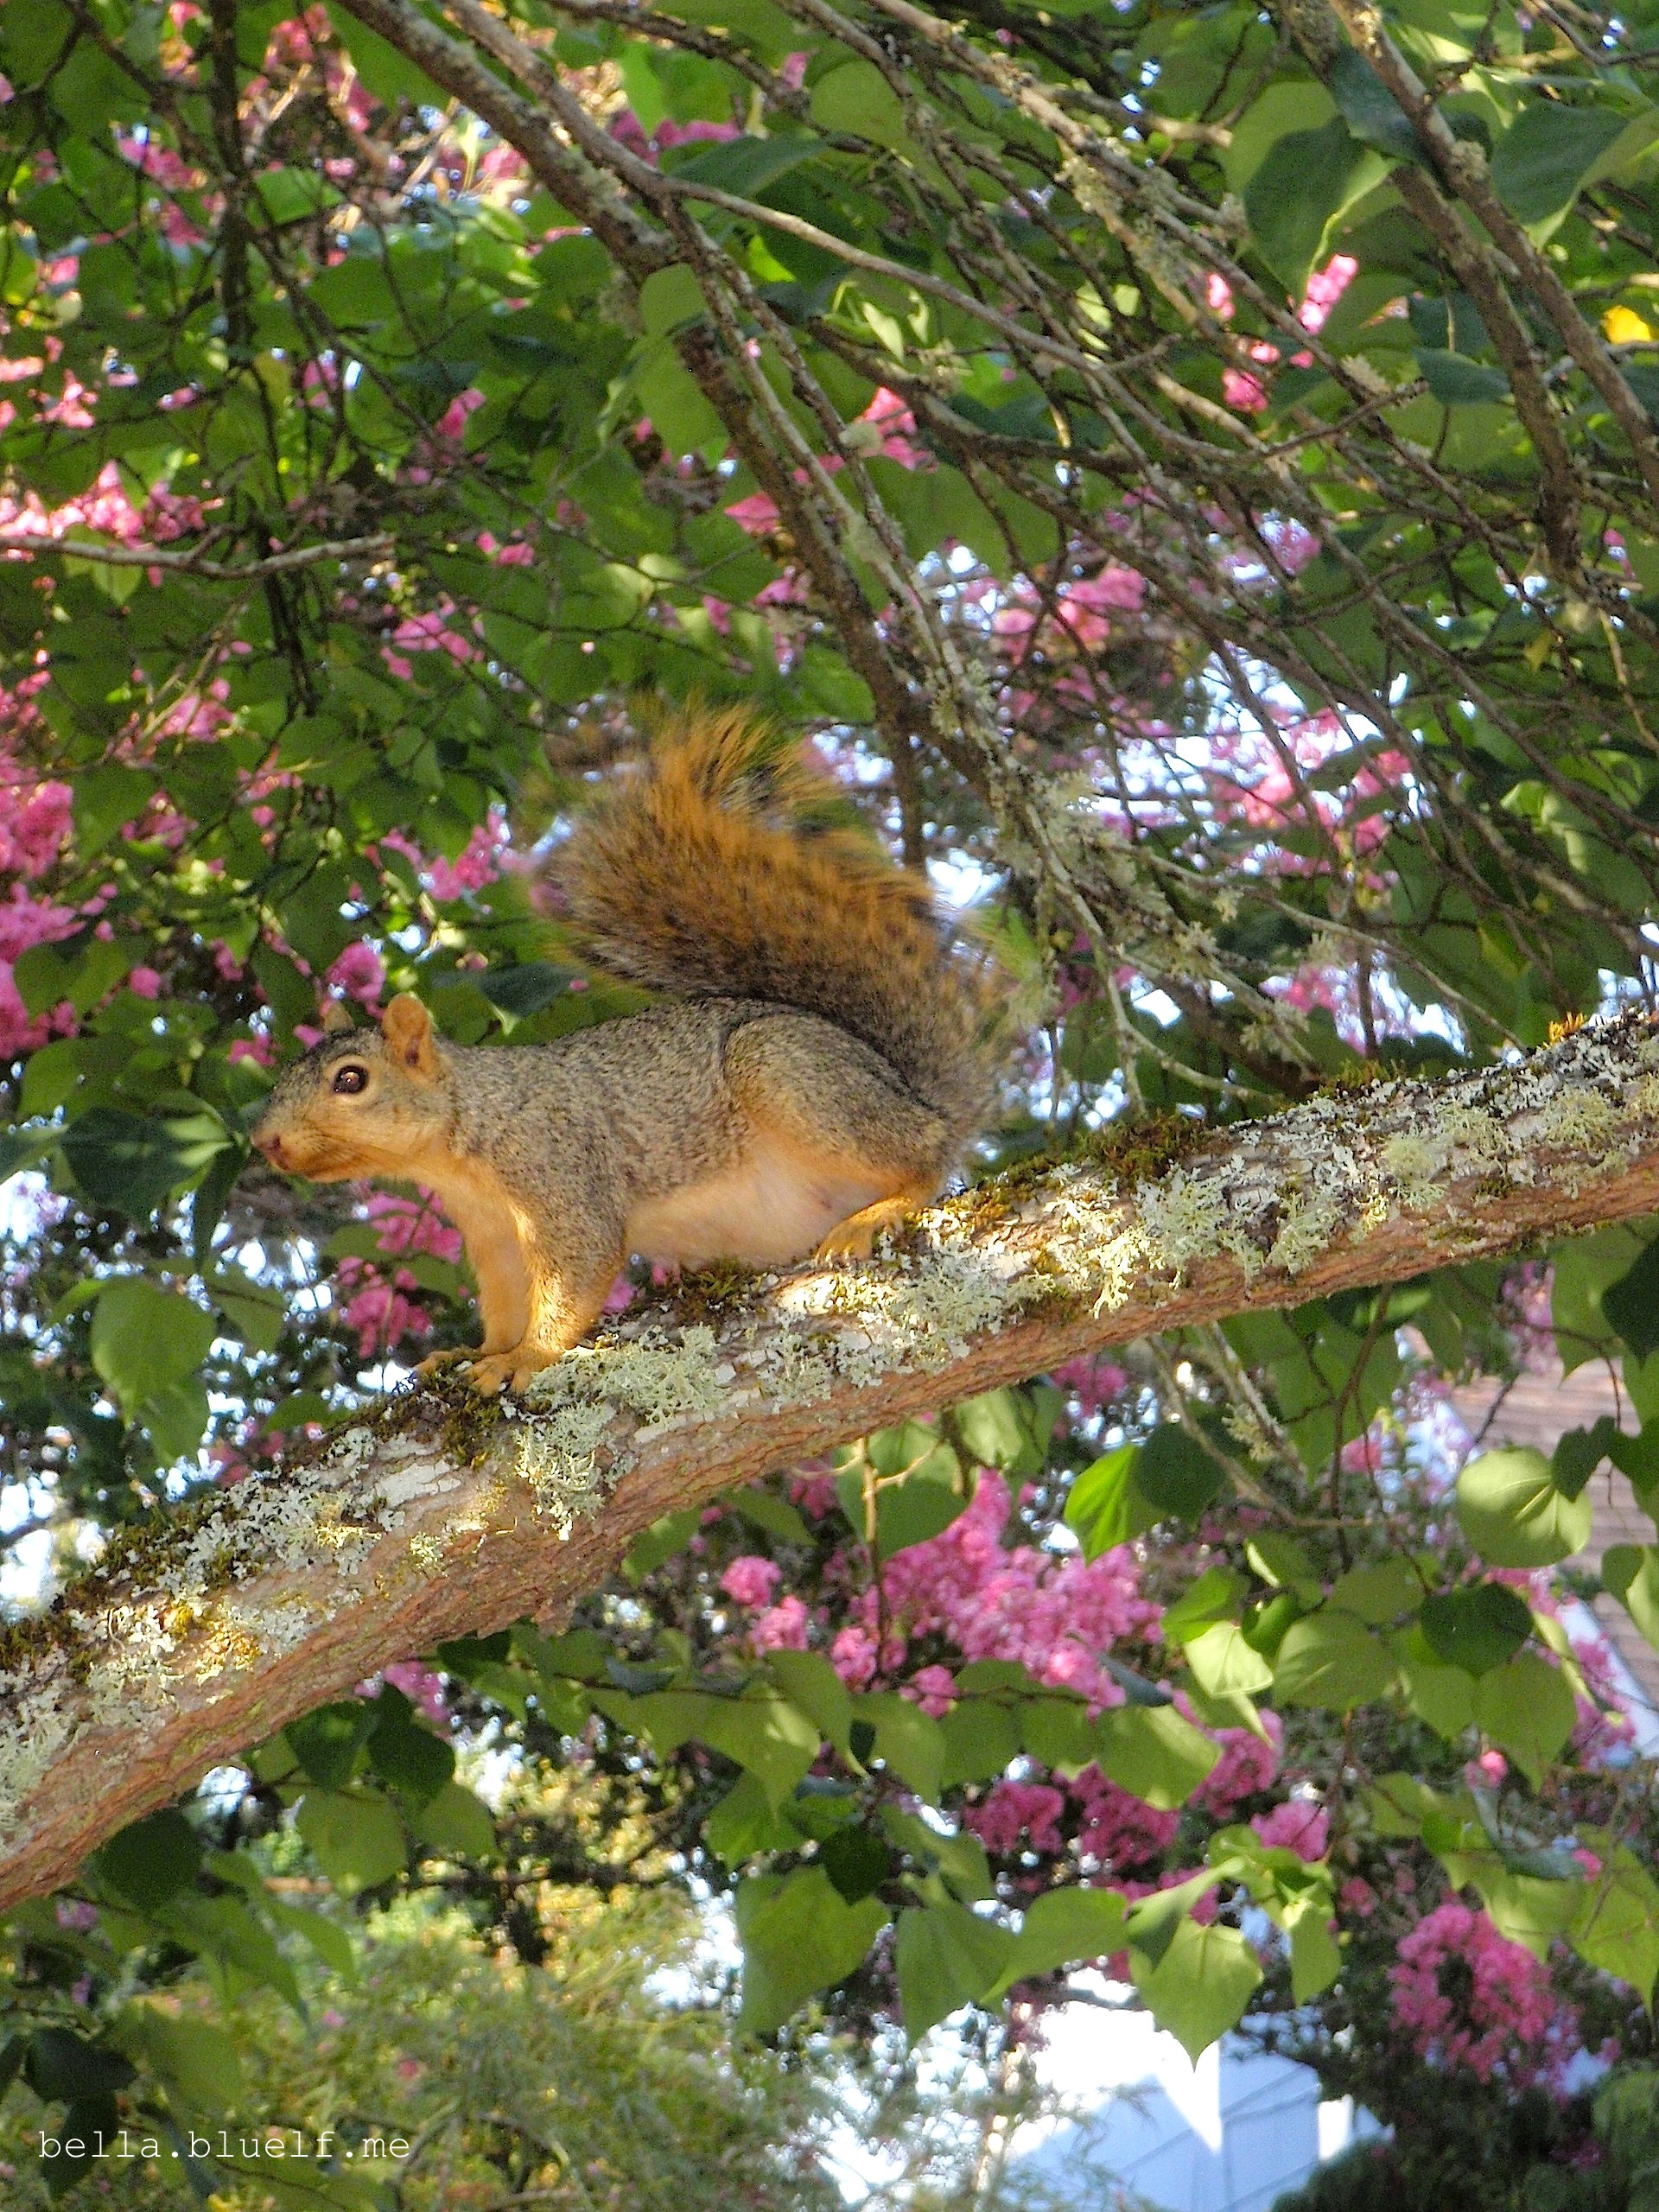 Squirrel on the tree 2015 - photo 2 by Rhônya Holman for bella.bluelf.me